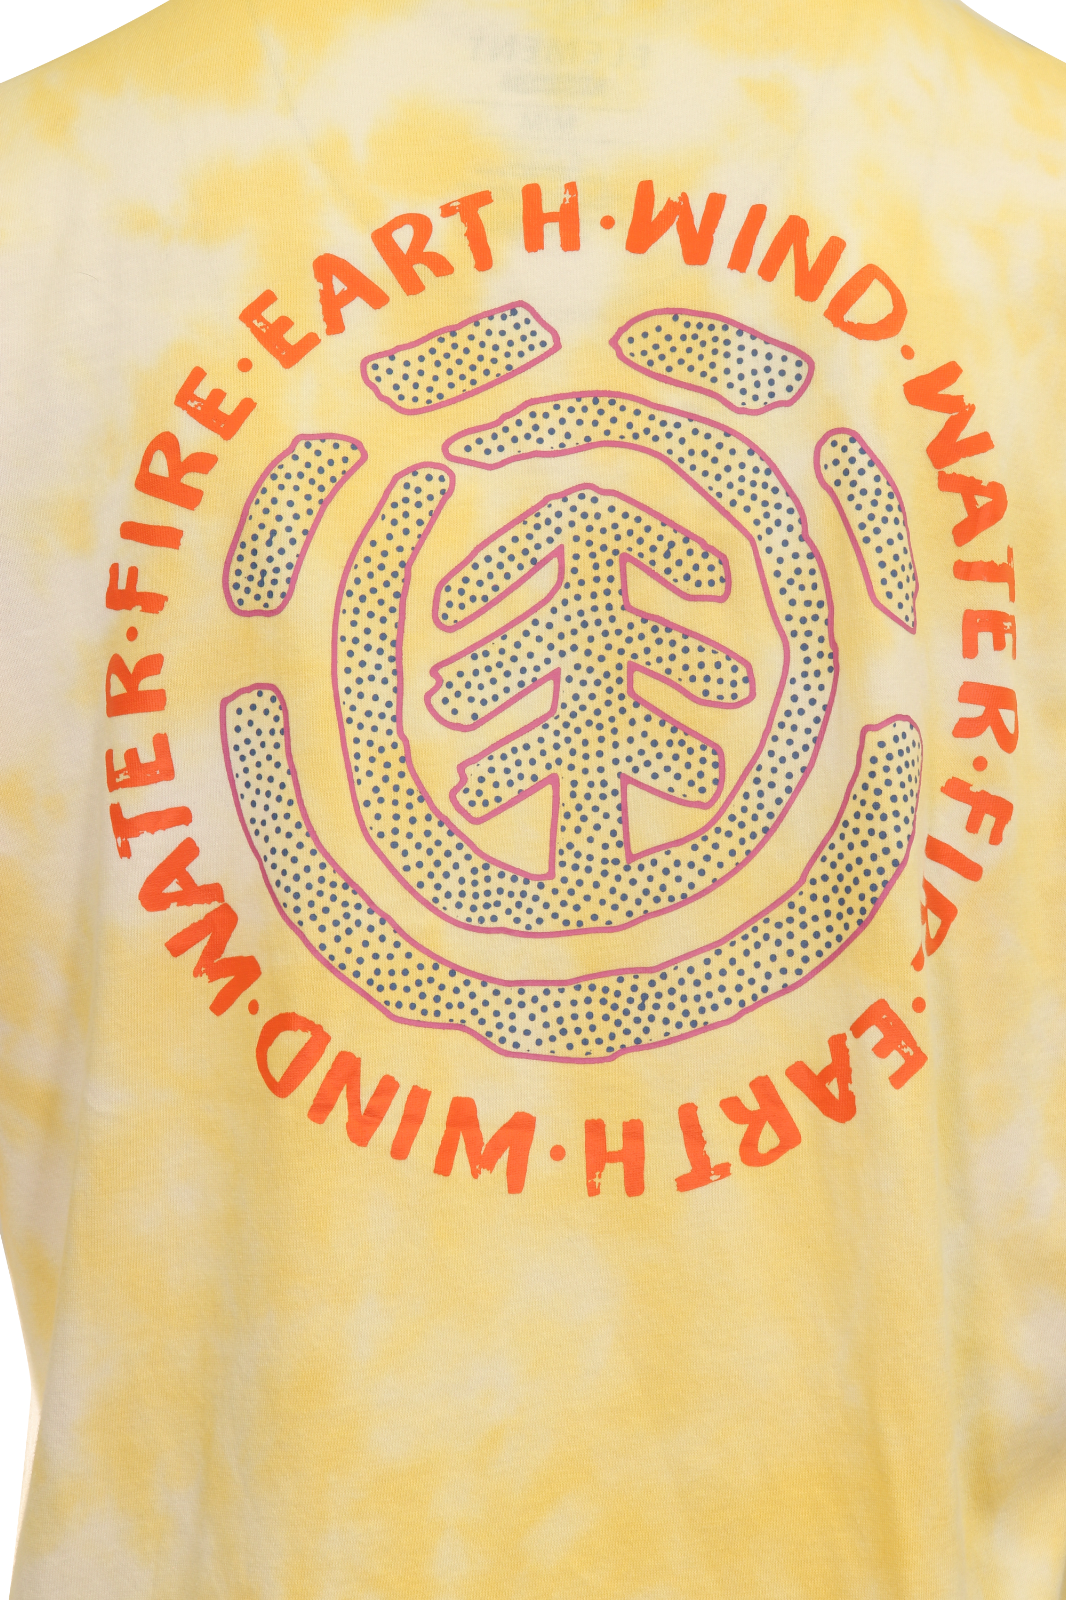 Element Men's T-Shirt Yellow Tie-Dye Four Elements Sketched Graphic S/S (S14)